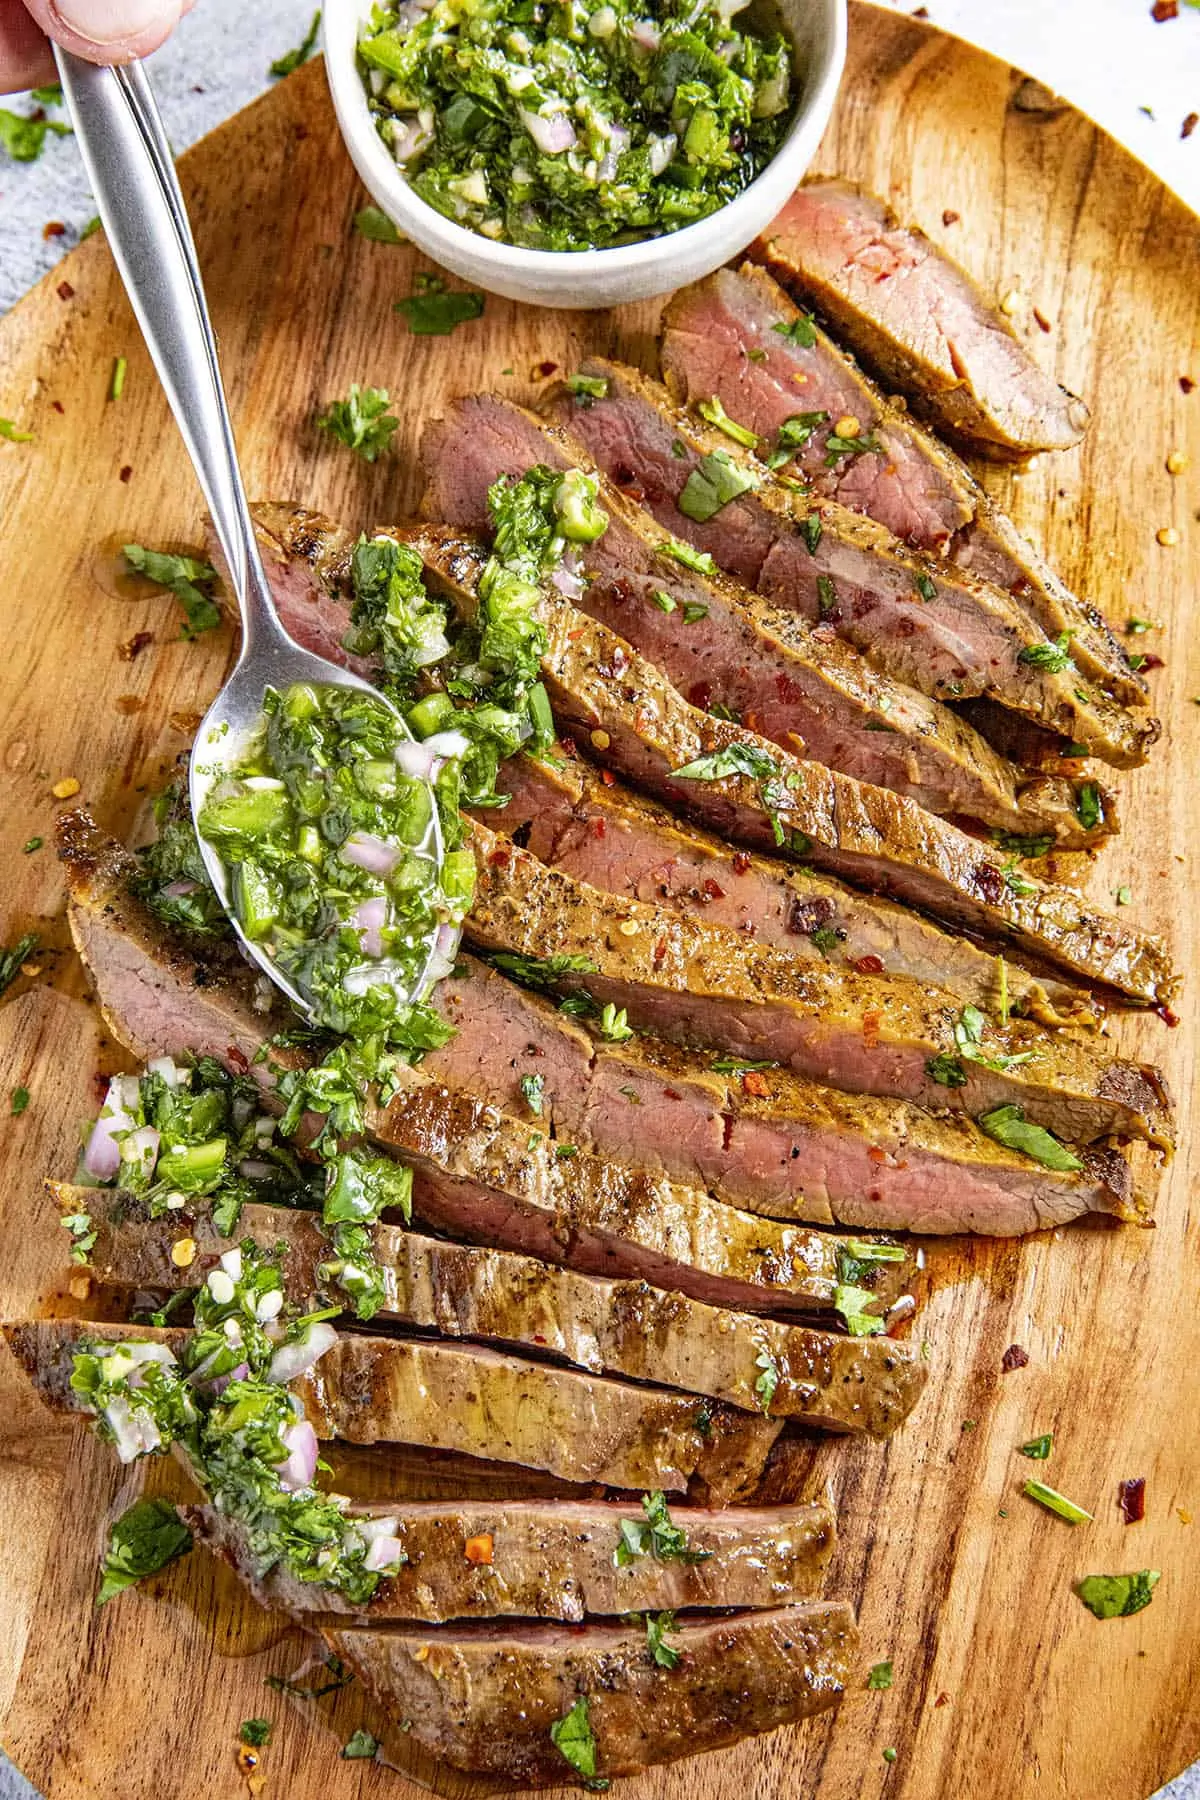 Chimichurri Steak cut into thin slices.